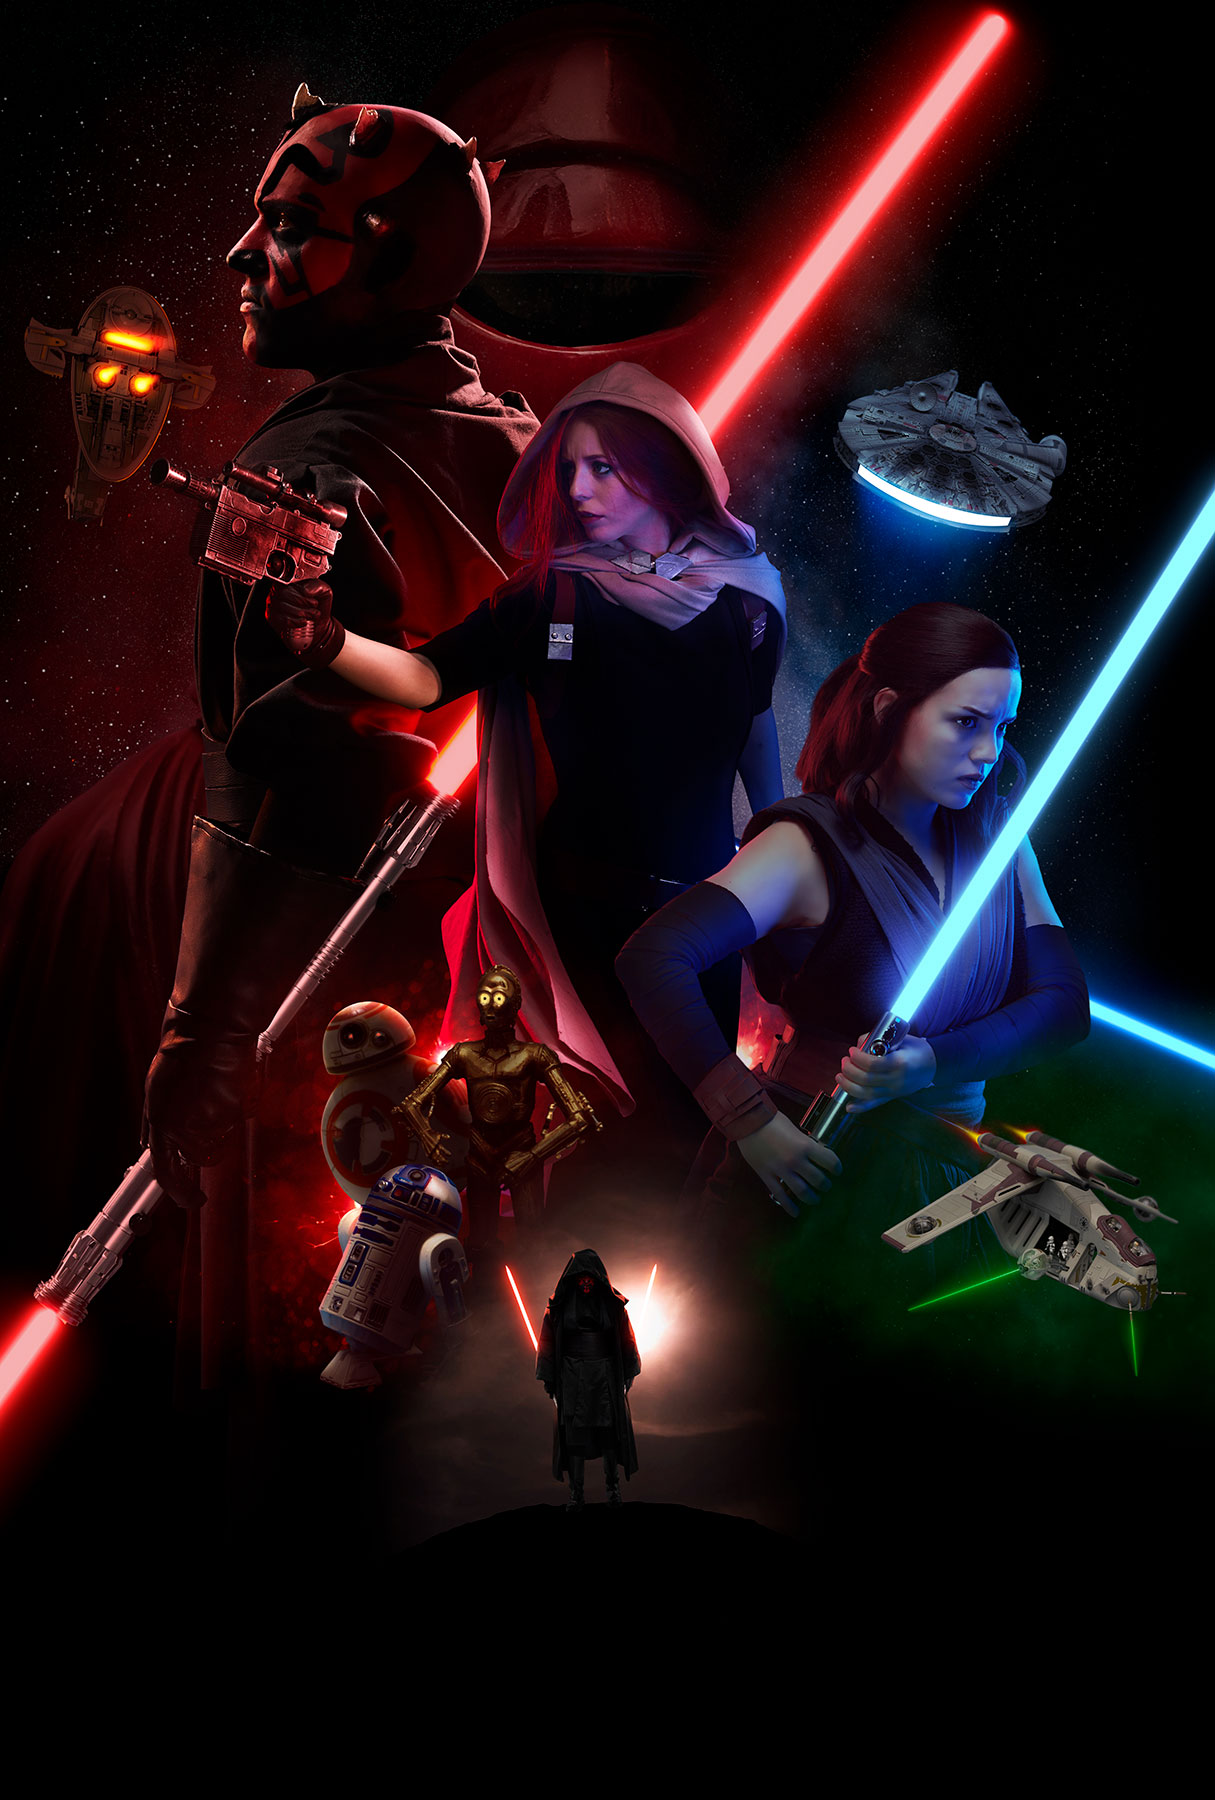 Sayanoff Arthur Star Wars Poster 02 13